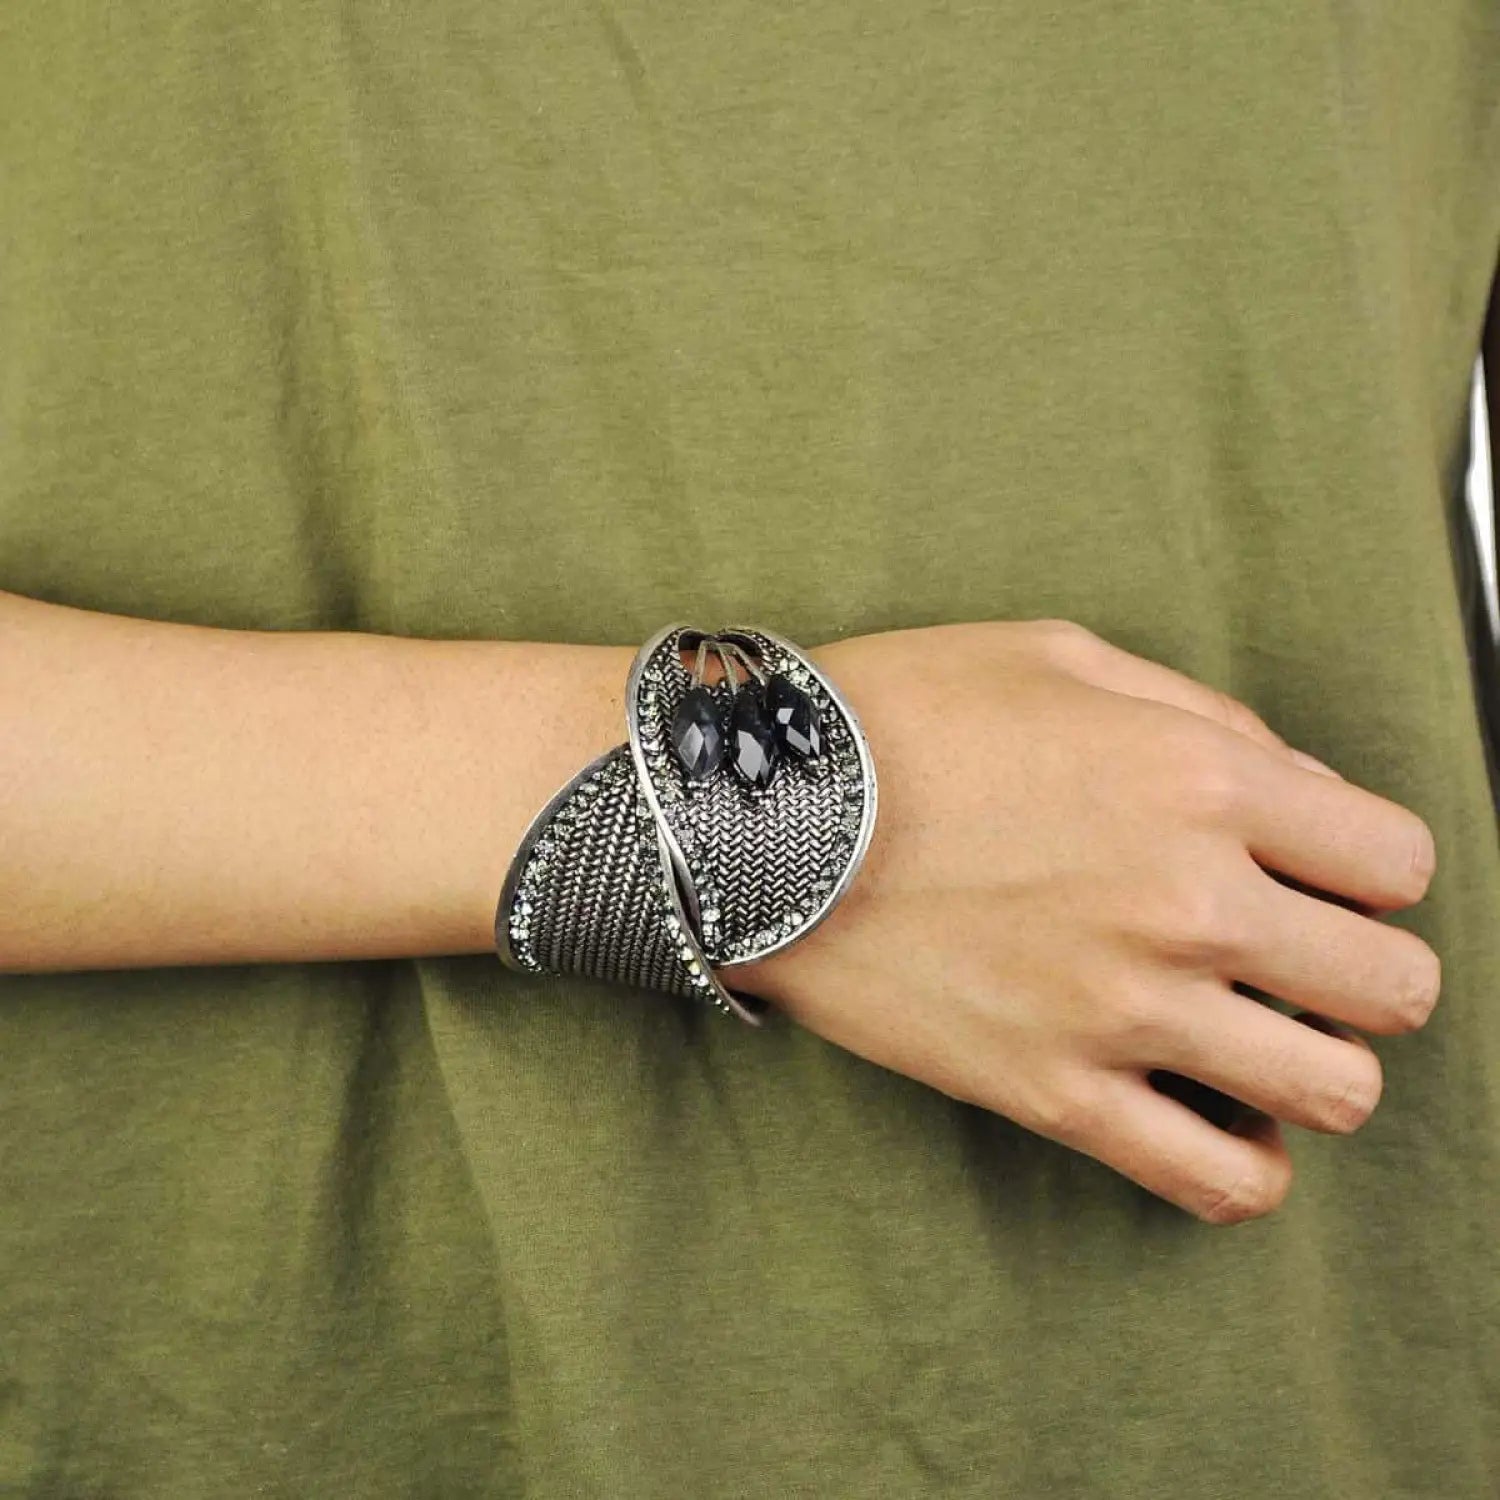 Silver bangle bracelet with black and white snake.